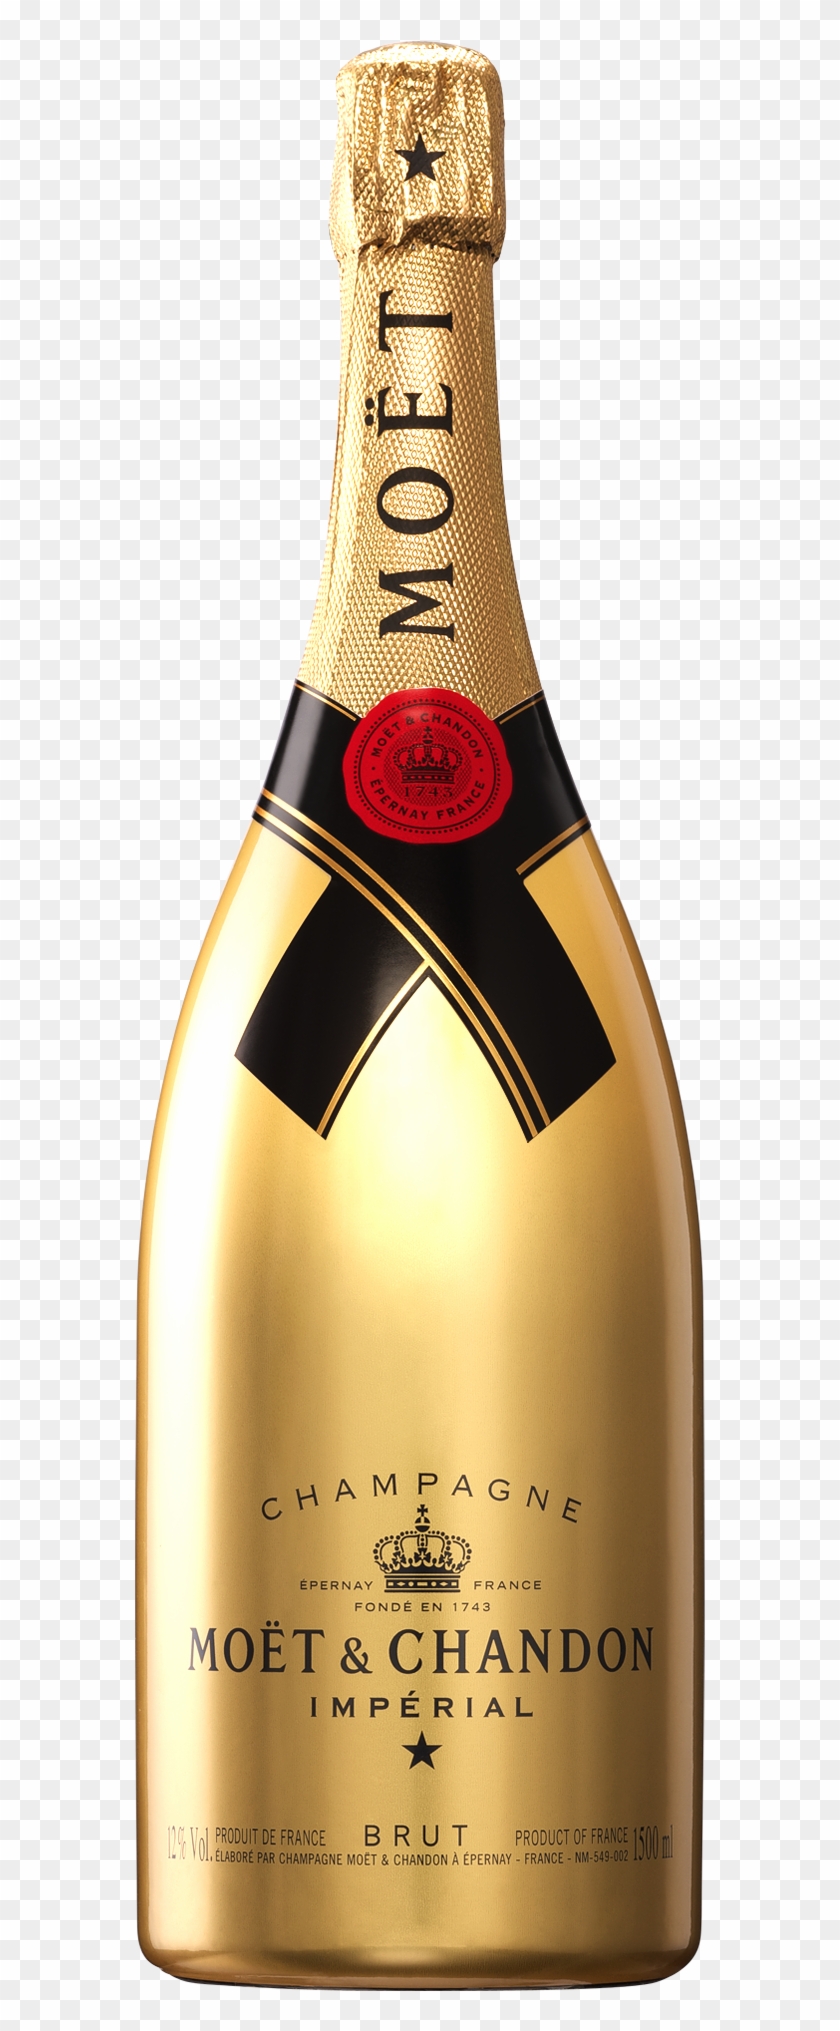 Champagne Cork PNG Images & PSDs for Download